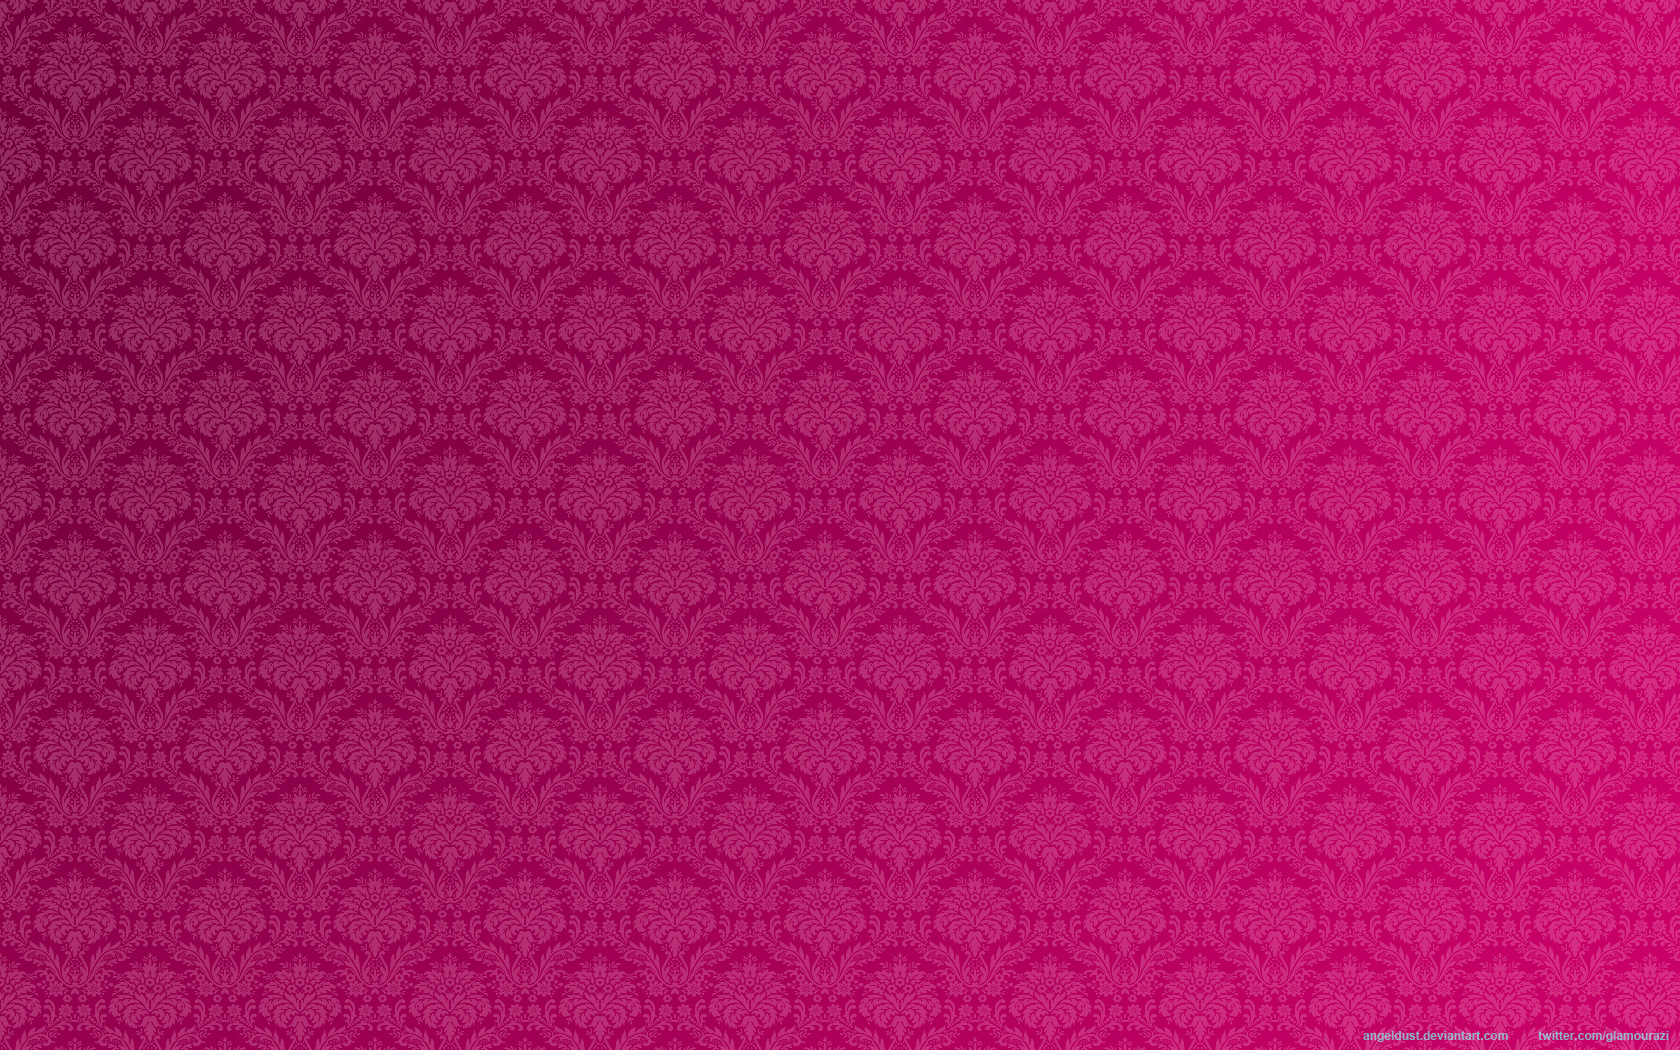 Free download Hot Pink And Black Damask Wallpaper [1680x1050] for your  Desktop, Mobile & Tablet | Explore 48+ Pink and Black Damask Wallpaper |  Pink and White Damask Wallpaper, Black and White